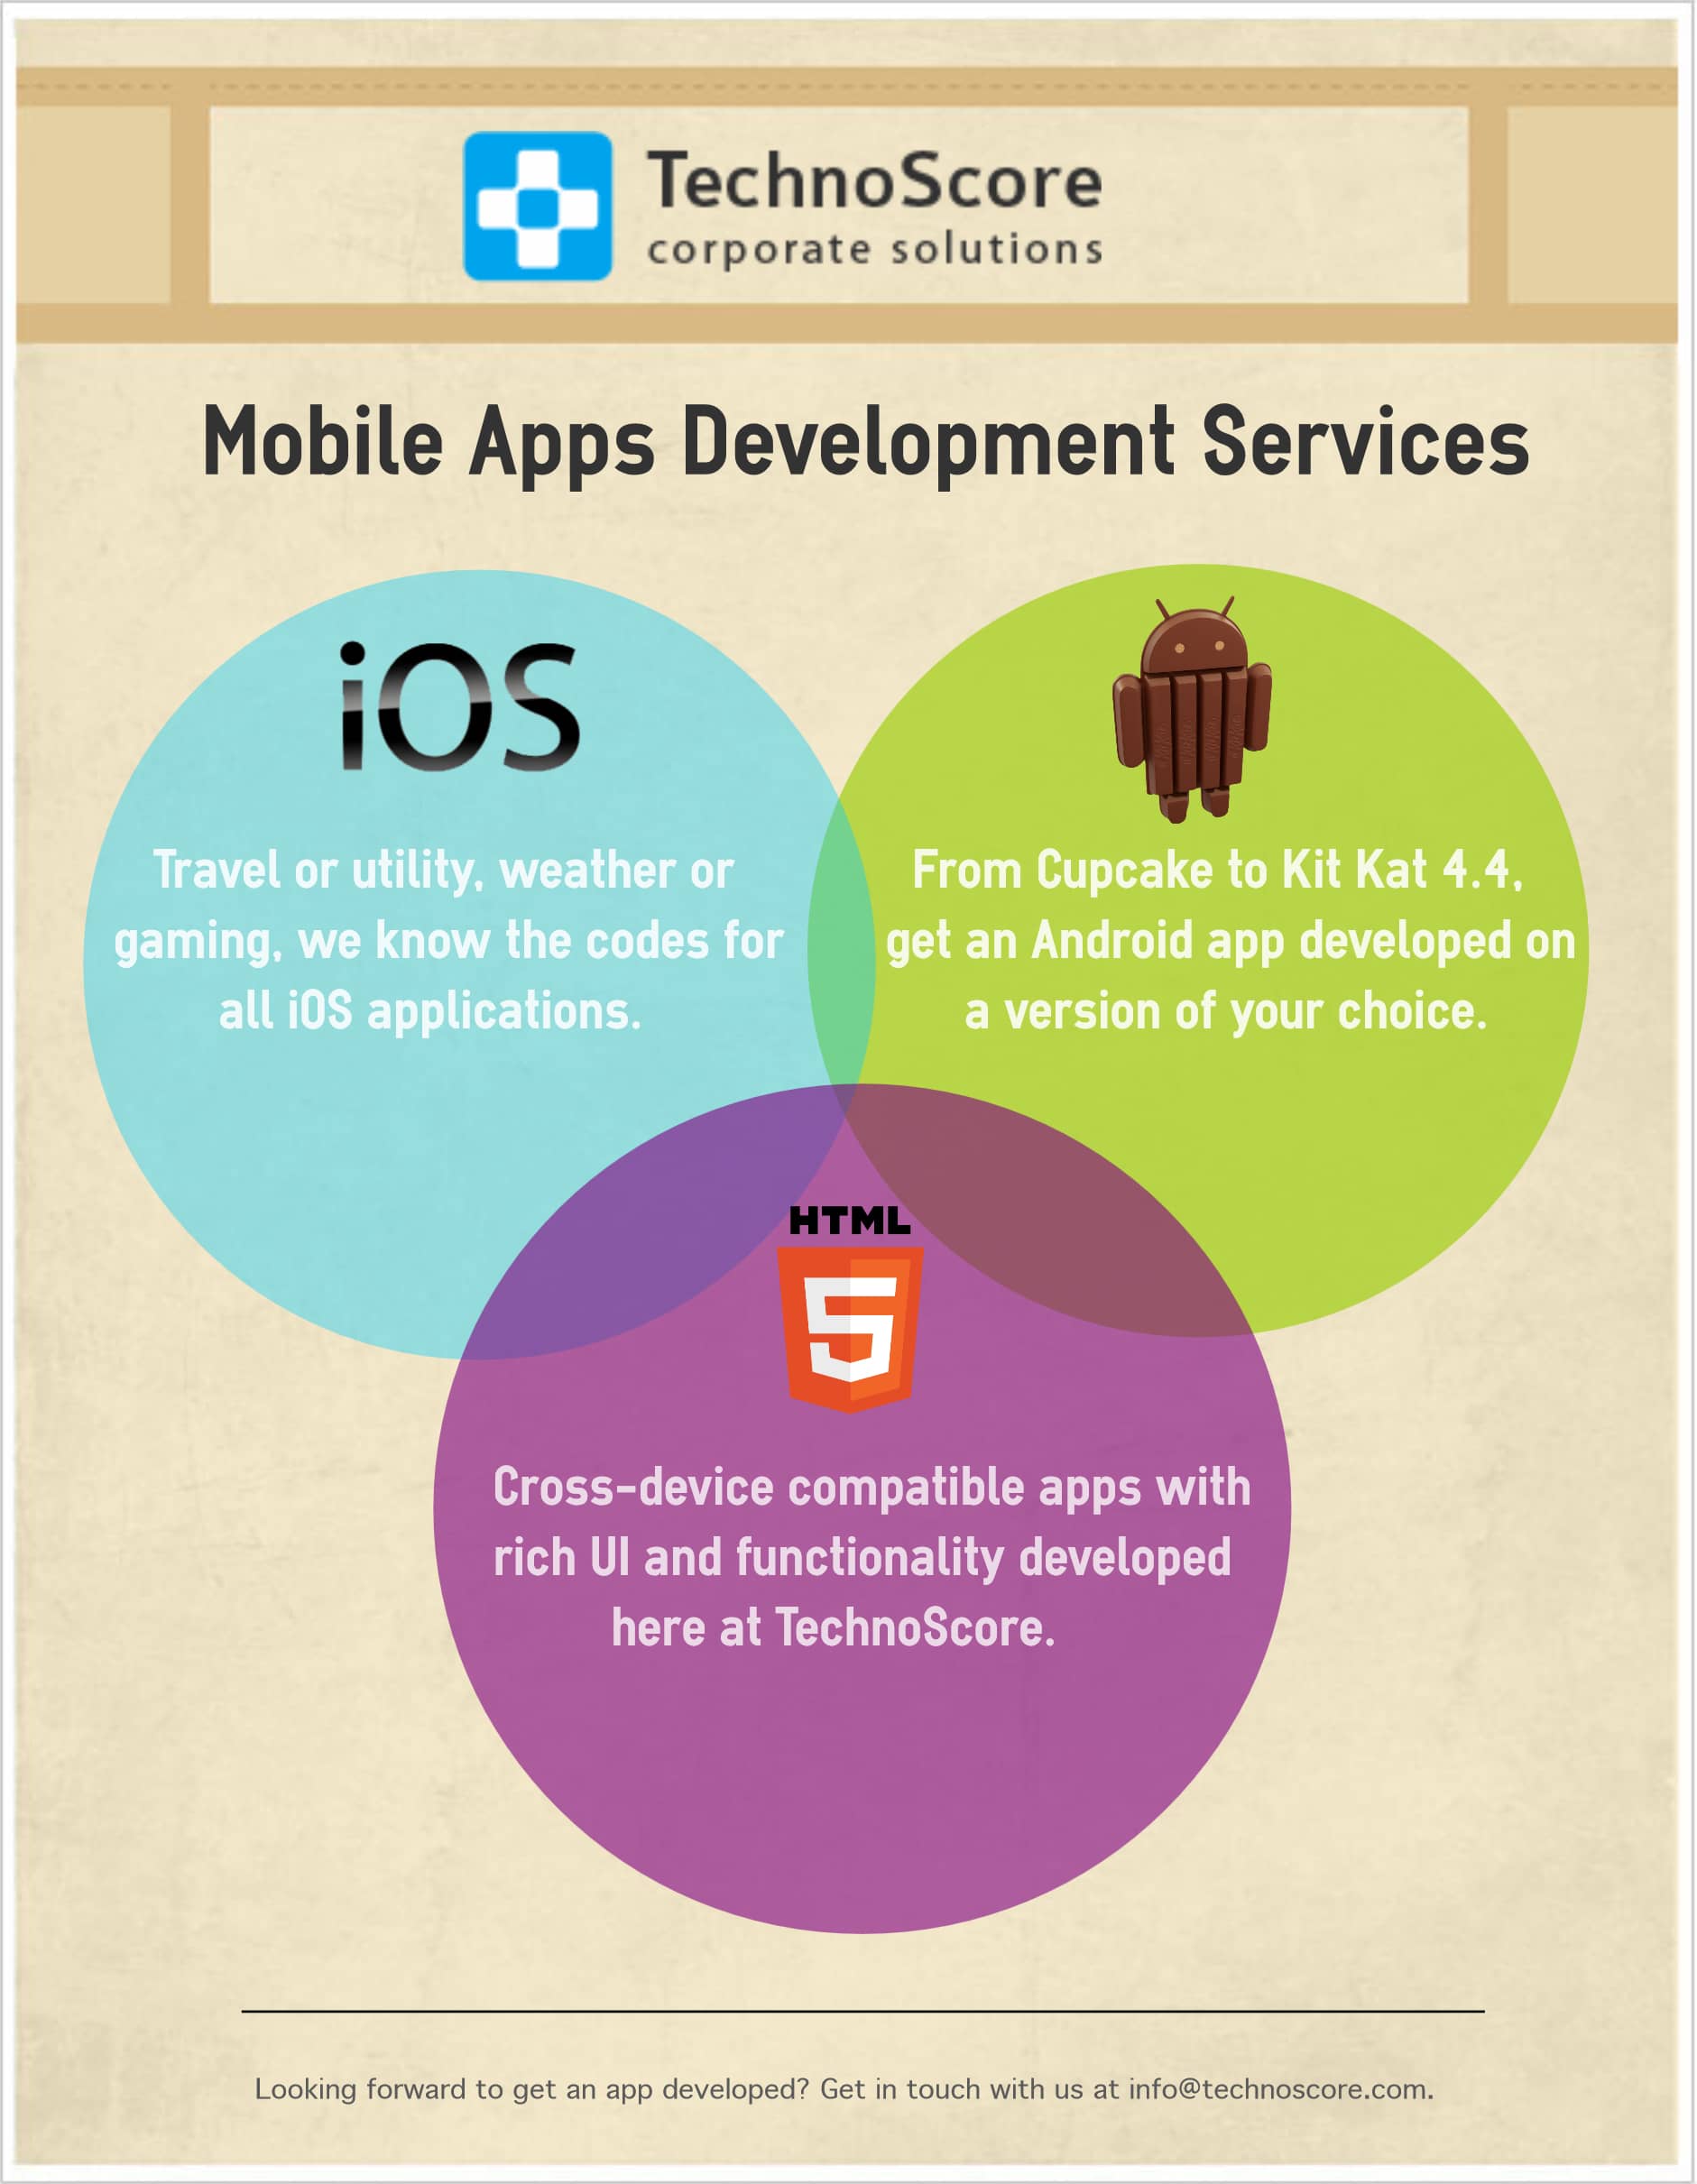 Mobile apps development services